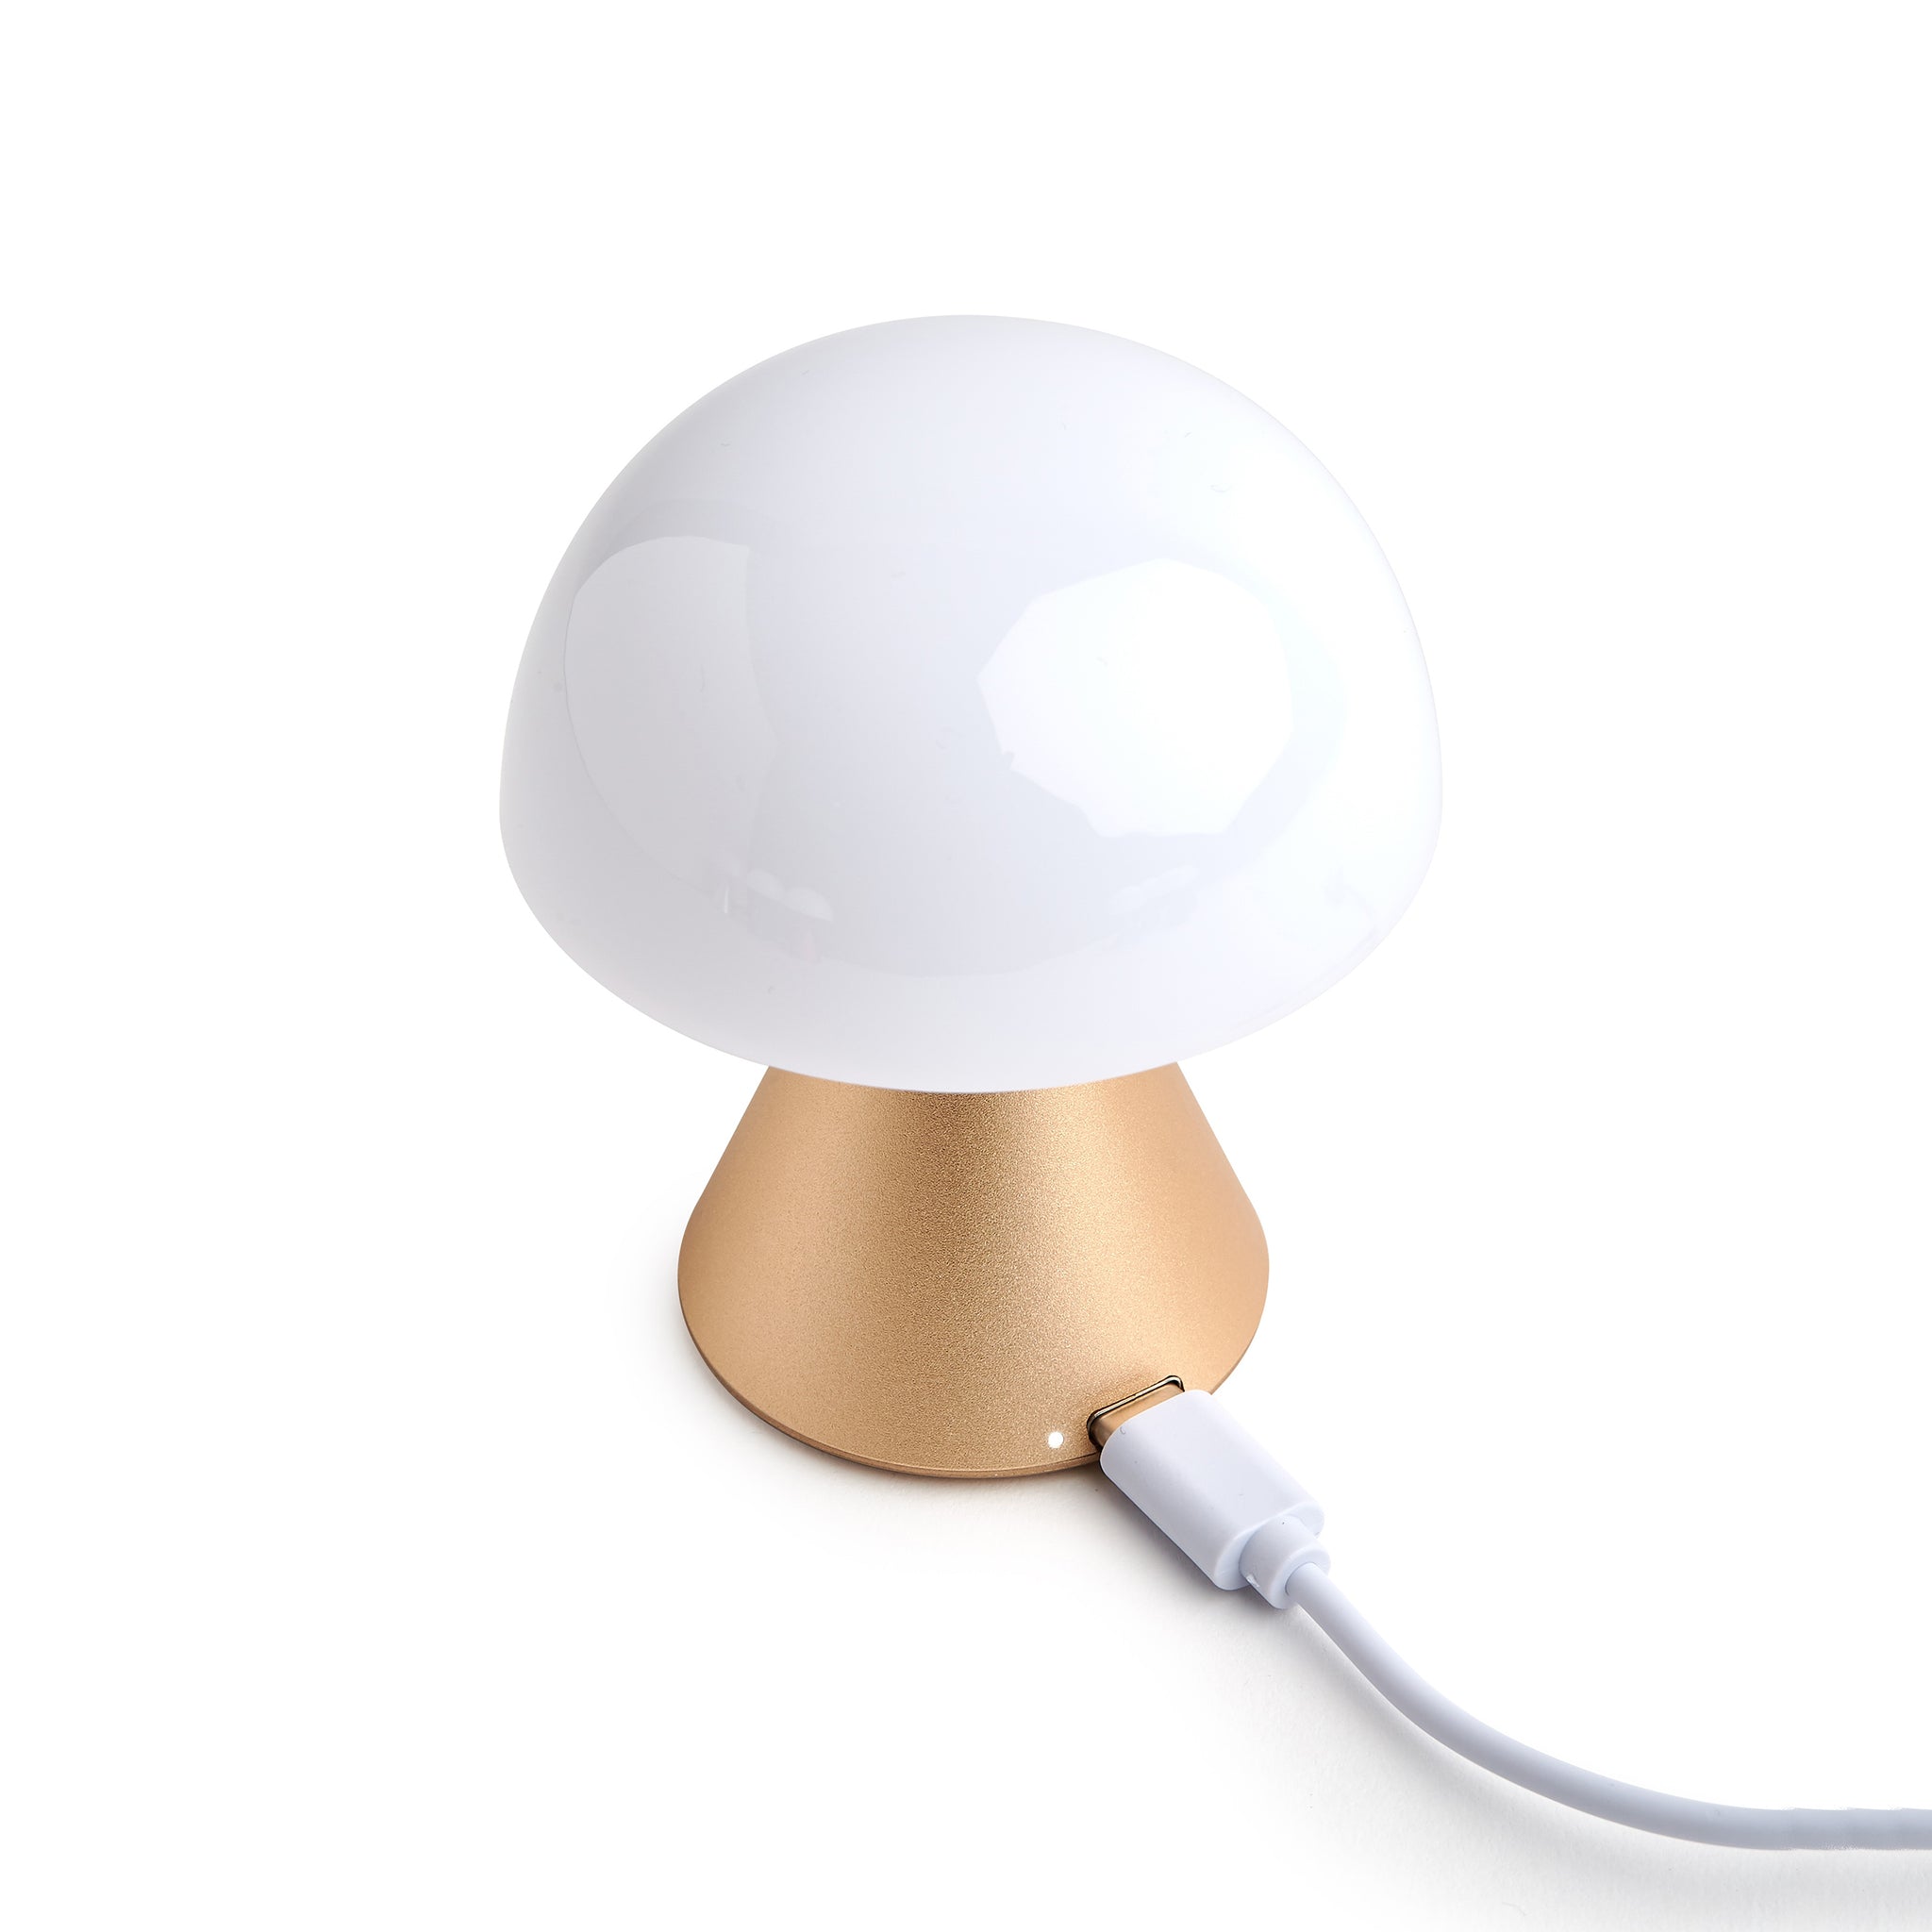 Lexon Mina Small Soft Gold│Oplaadbare LED lamp│art. LH60MD│met USB-kabel in oplader